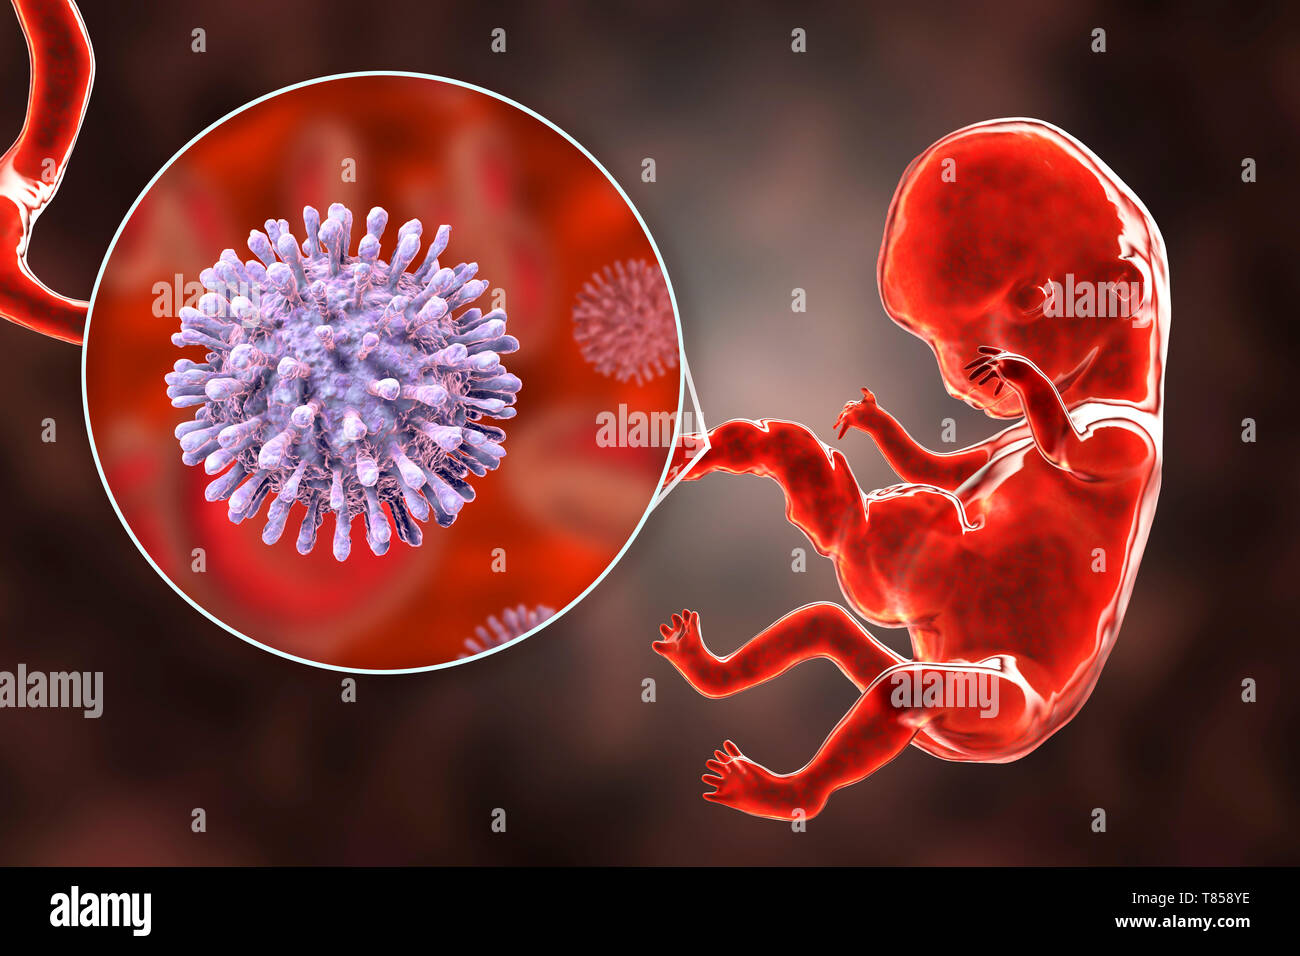 HIV infecting human embryo, illustration Stock Photo